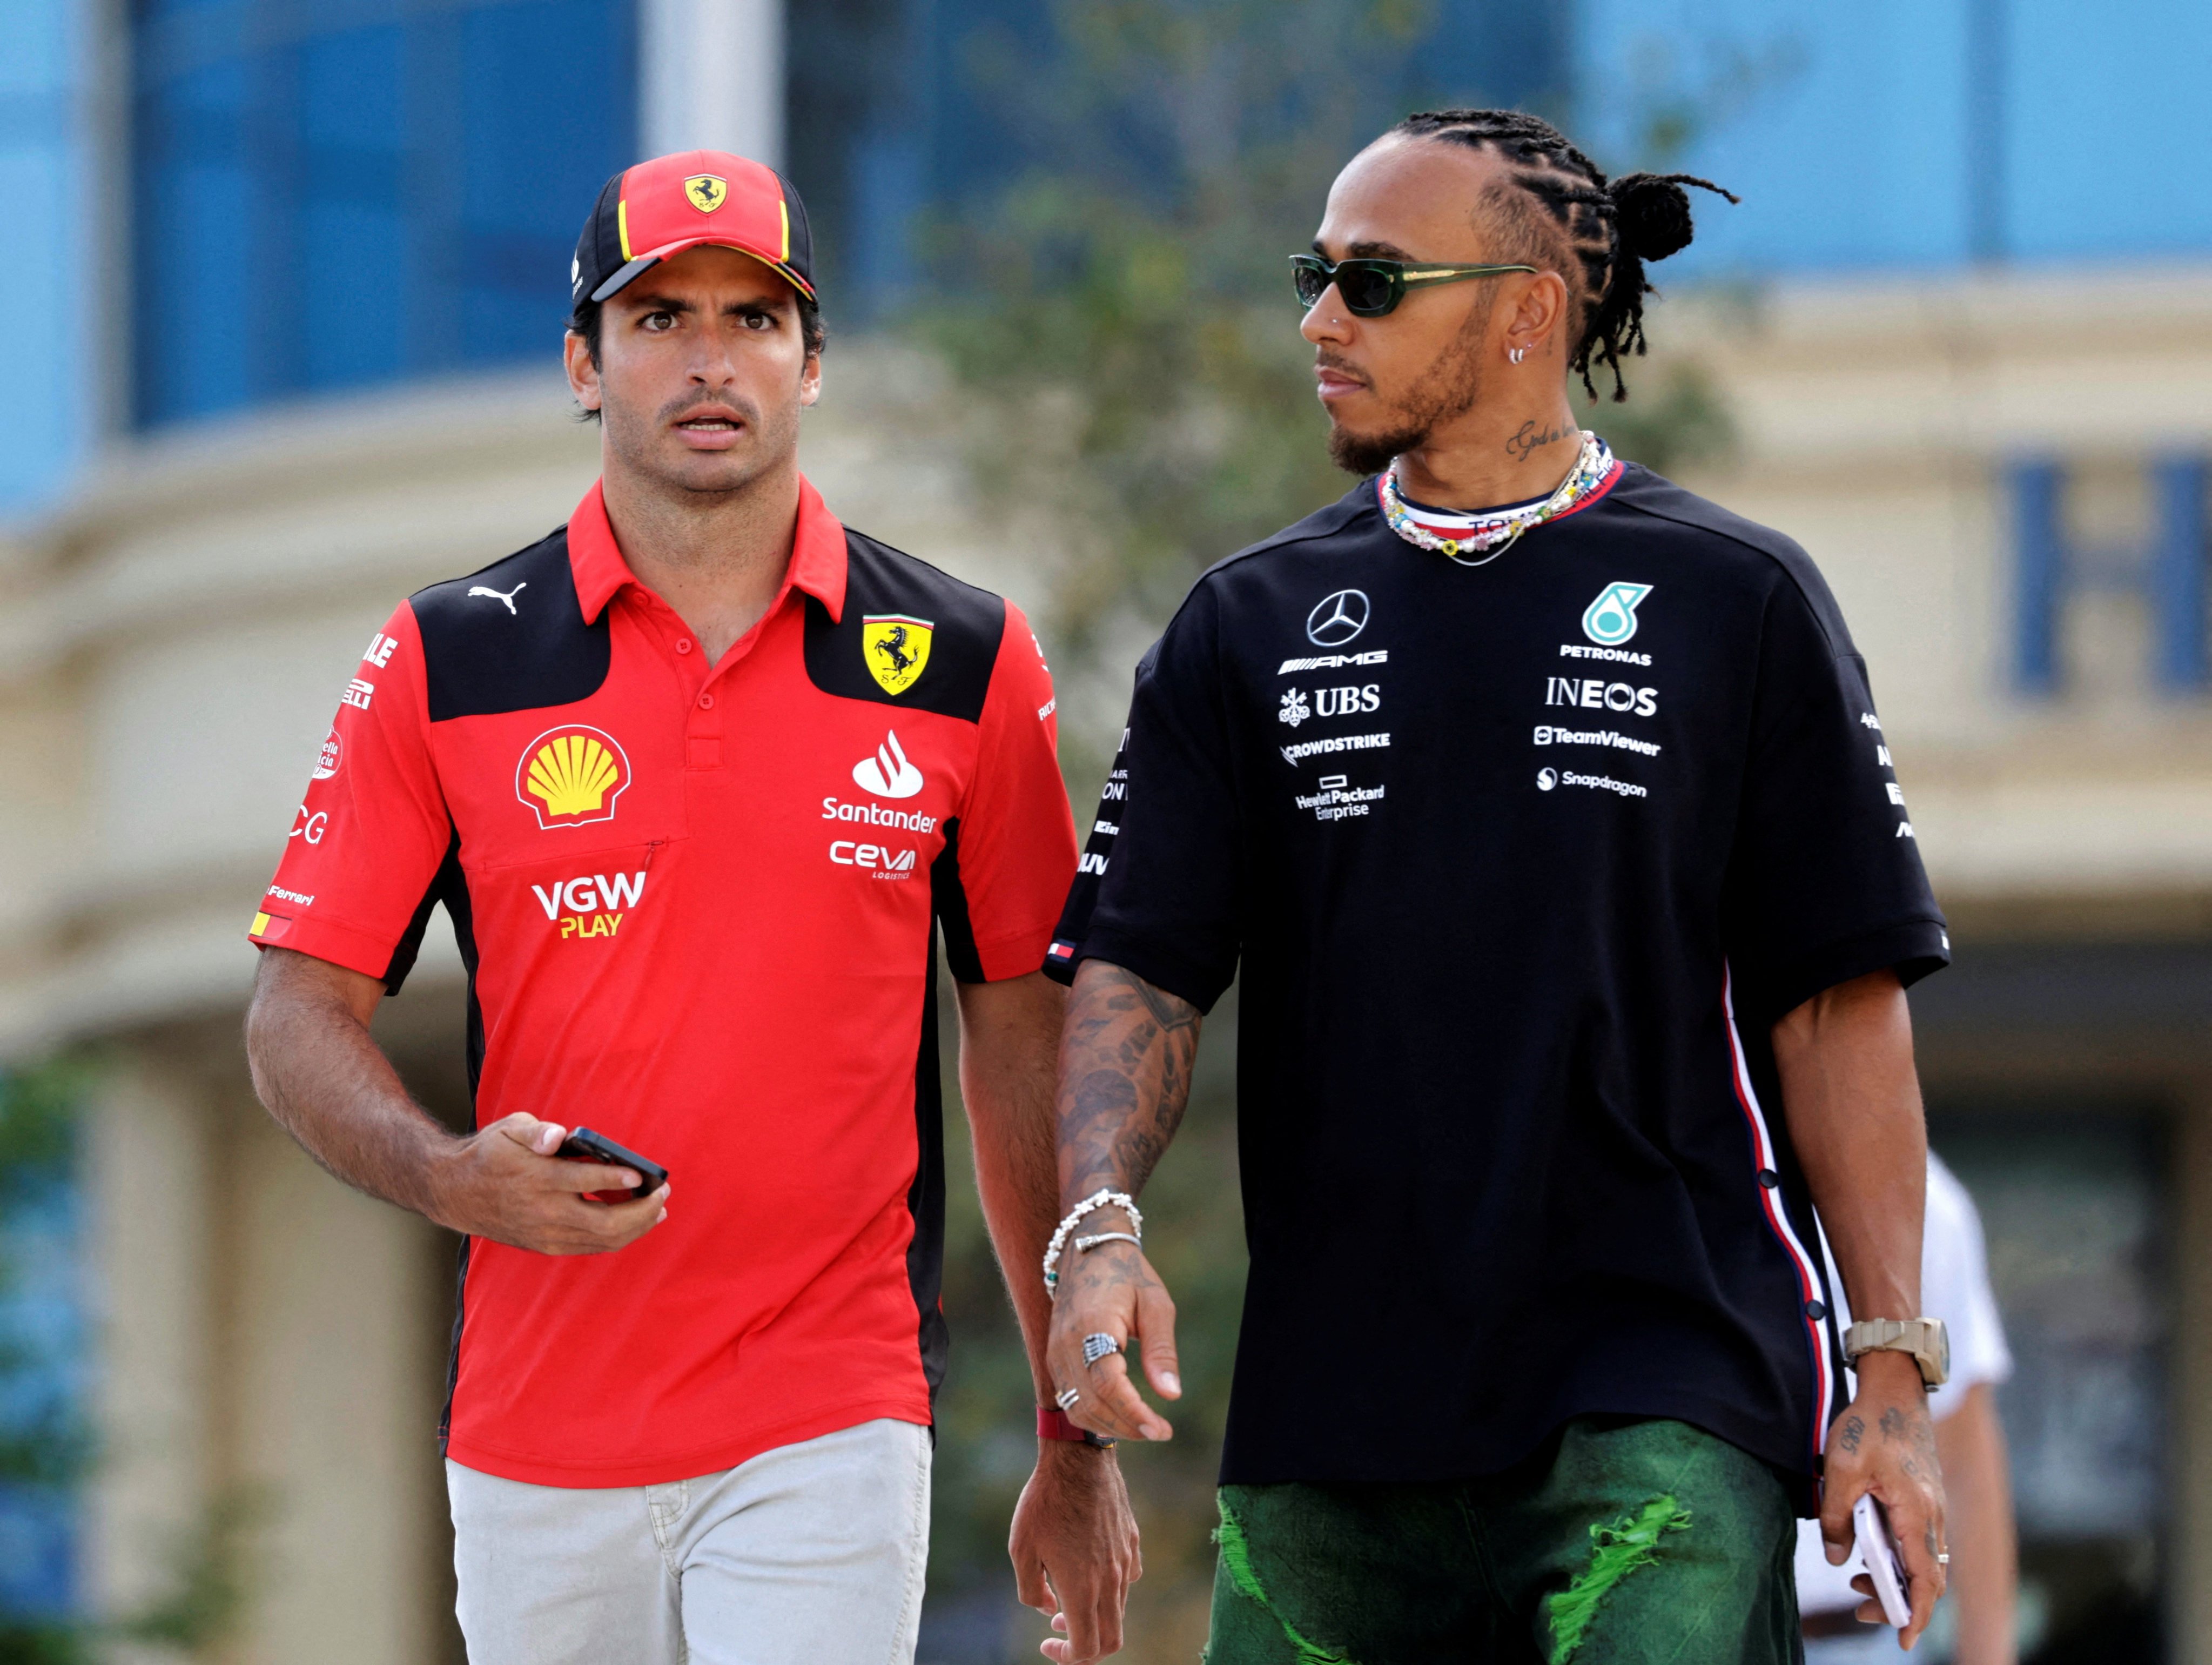 Ferrari’s Carlos Sainz Jr. and Mercedes’ Lewis Hamilton walk together ahead of the Azerbaijan Grand Prix in April, 2023. Photo: Reuters